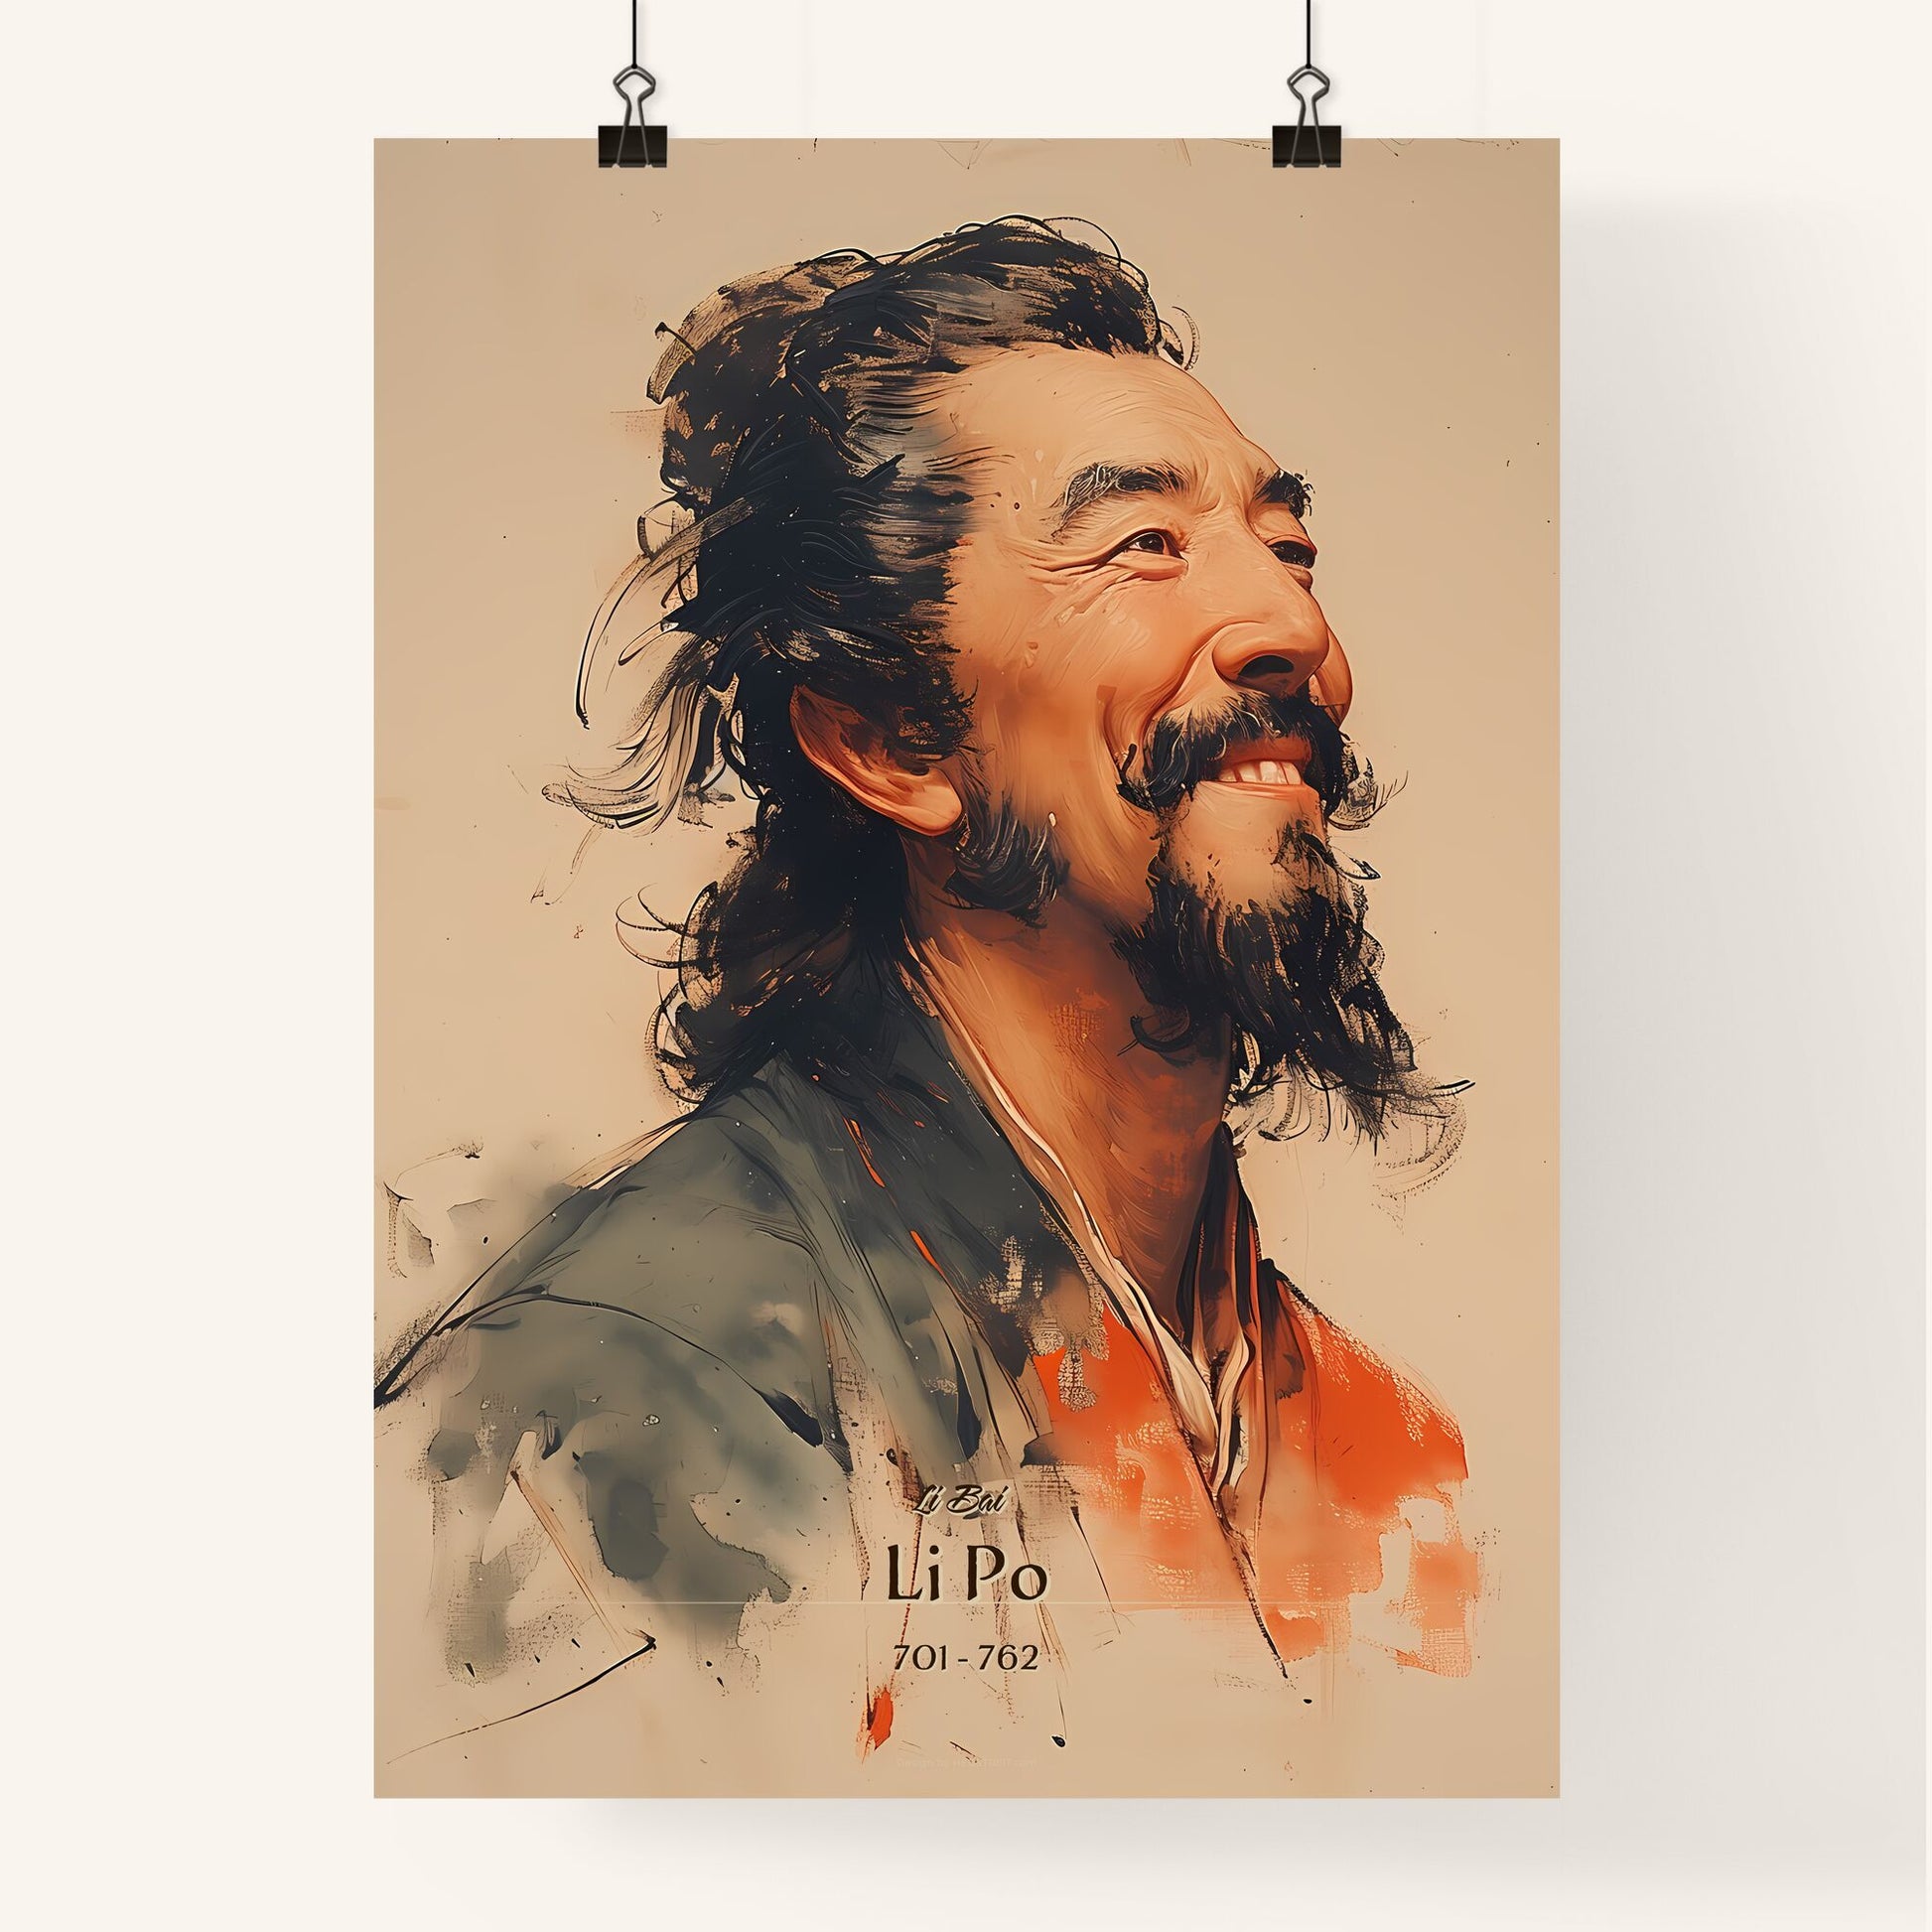 Li Bai, Li Po, 701 - 762, A Poster of a man with long hair and beard Default Title